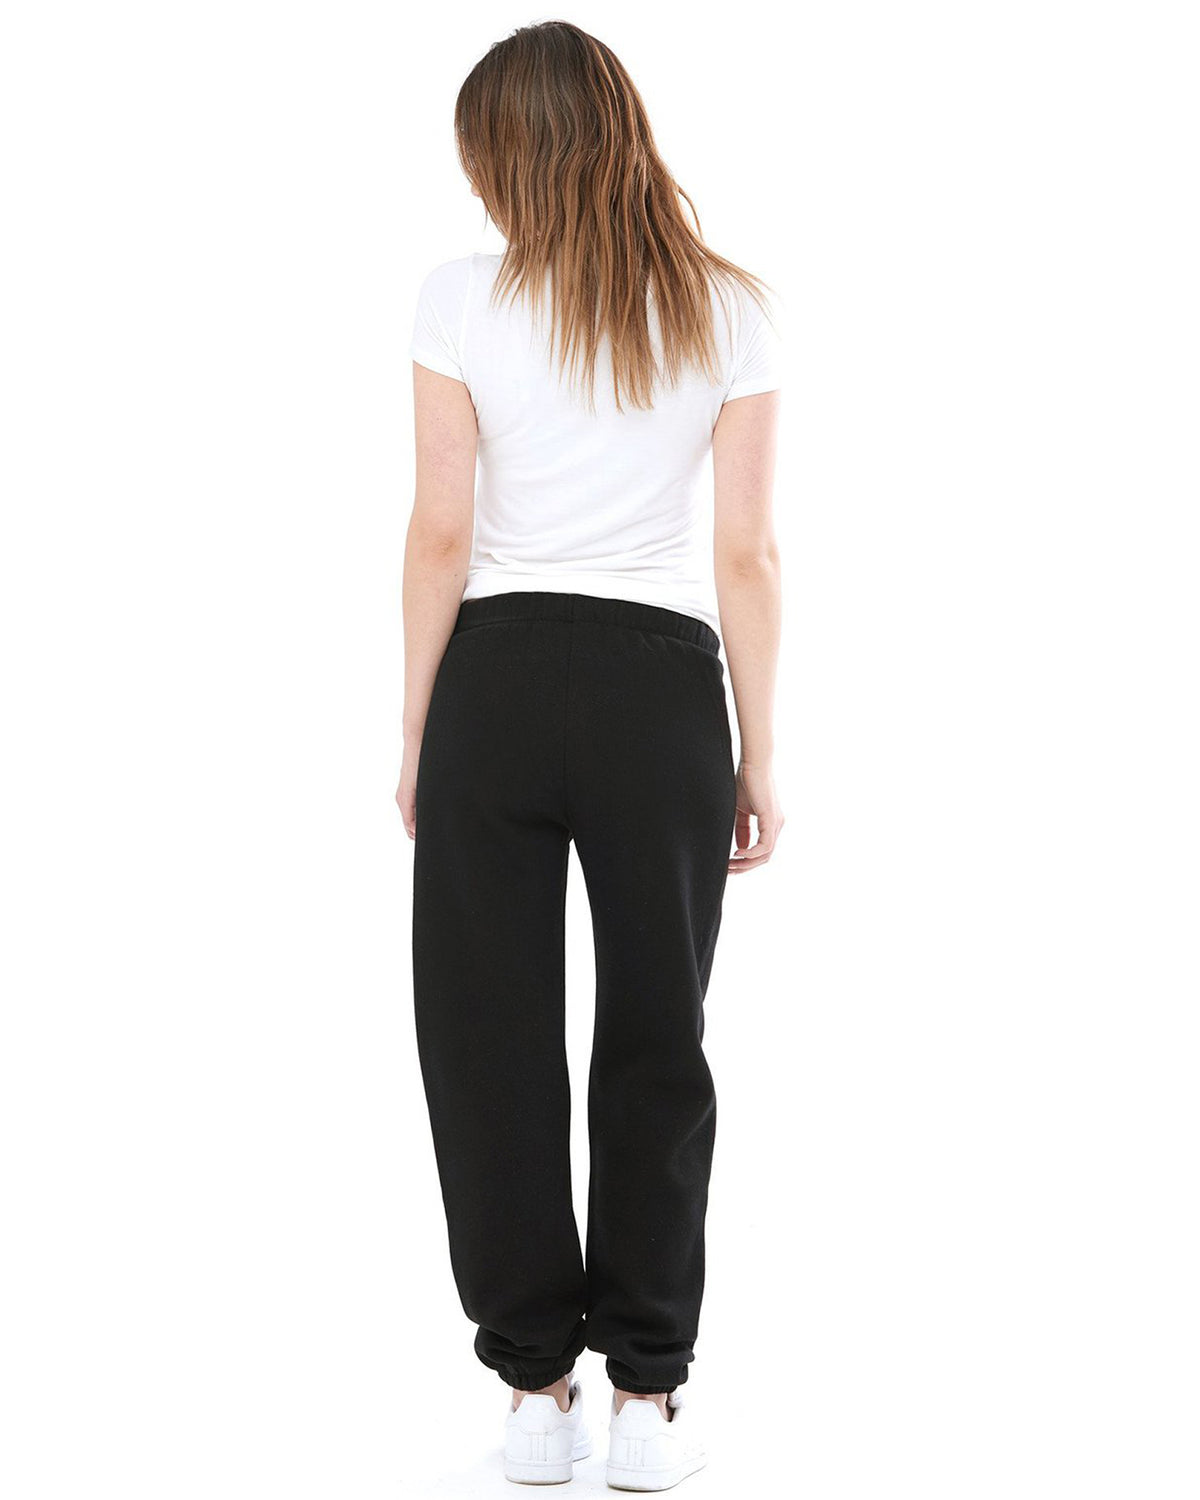 Lazypants Niki Fleece Sweatpants - Girls/Boys - Black - Activewear - Bottoms - Dancewear Centre Canada